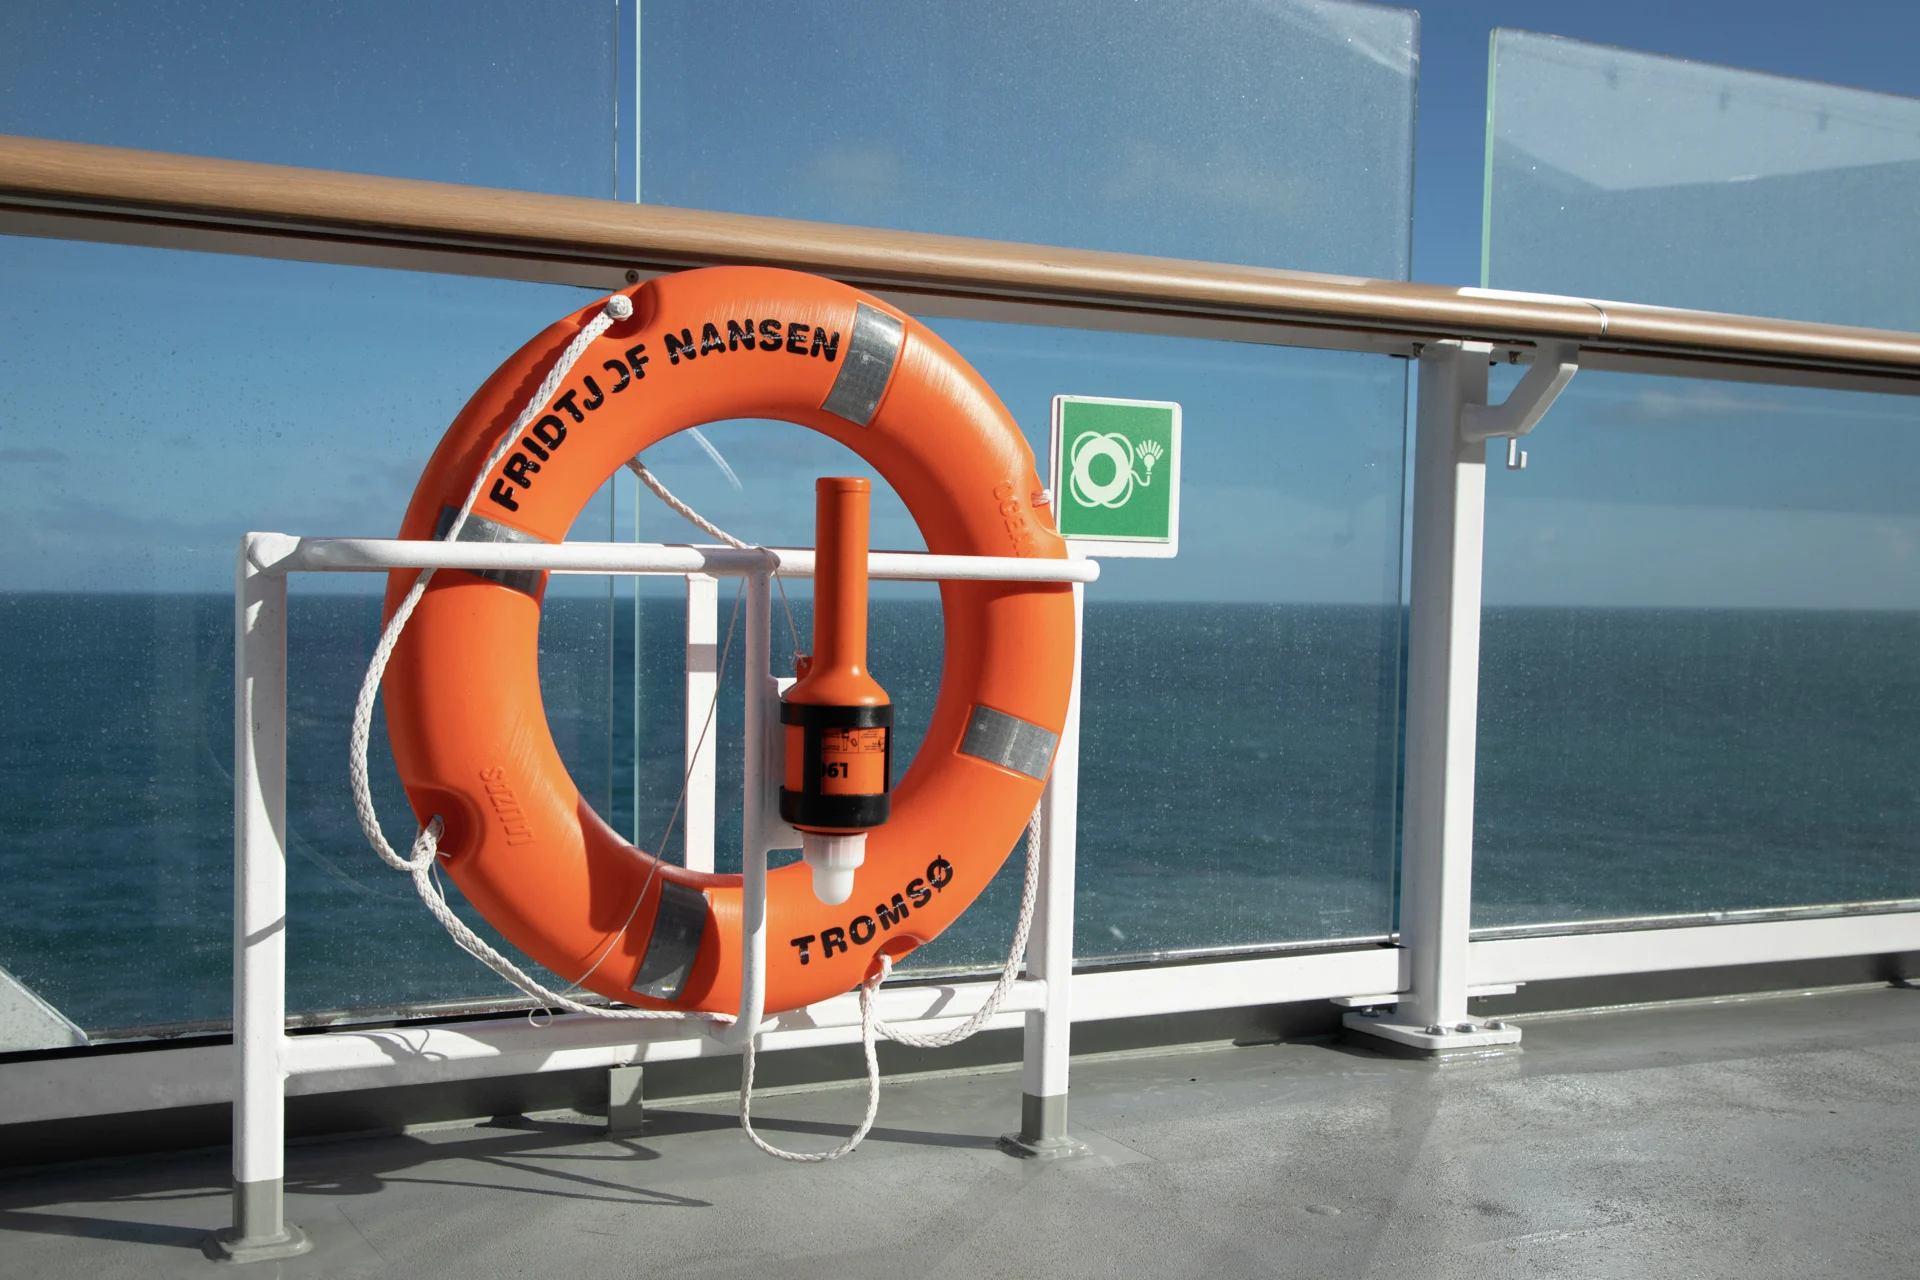 On board the Hurtigruten ship, "safety first" applies as the most important. Credit: Oscar Farrera / Hurtigruten.
